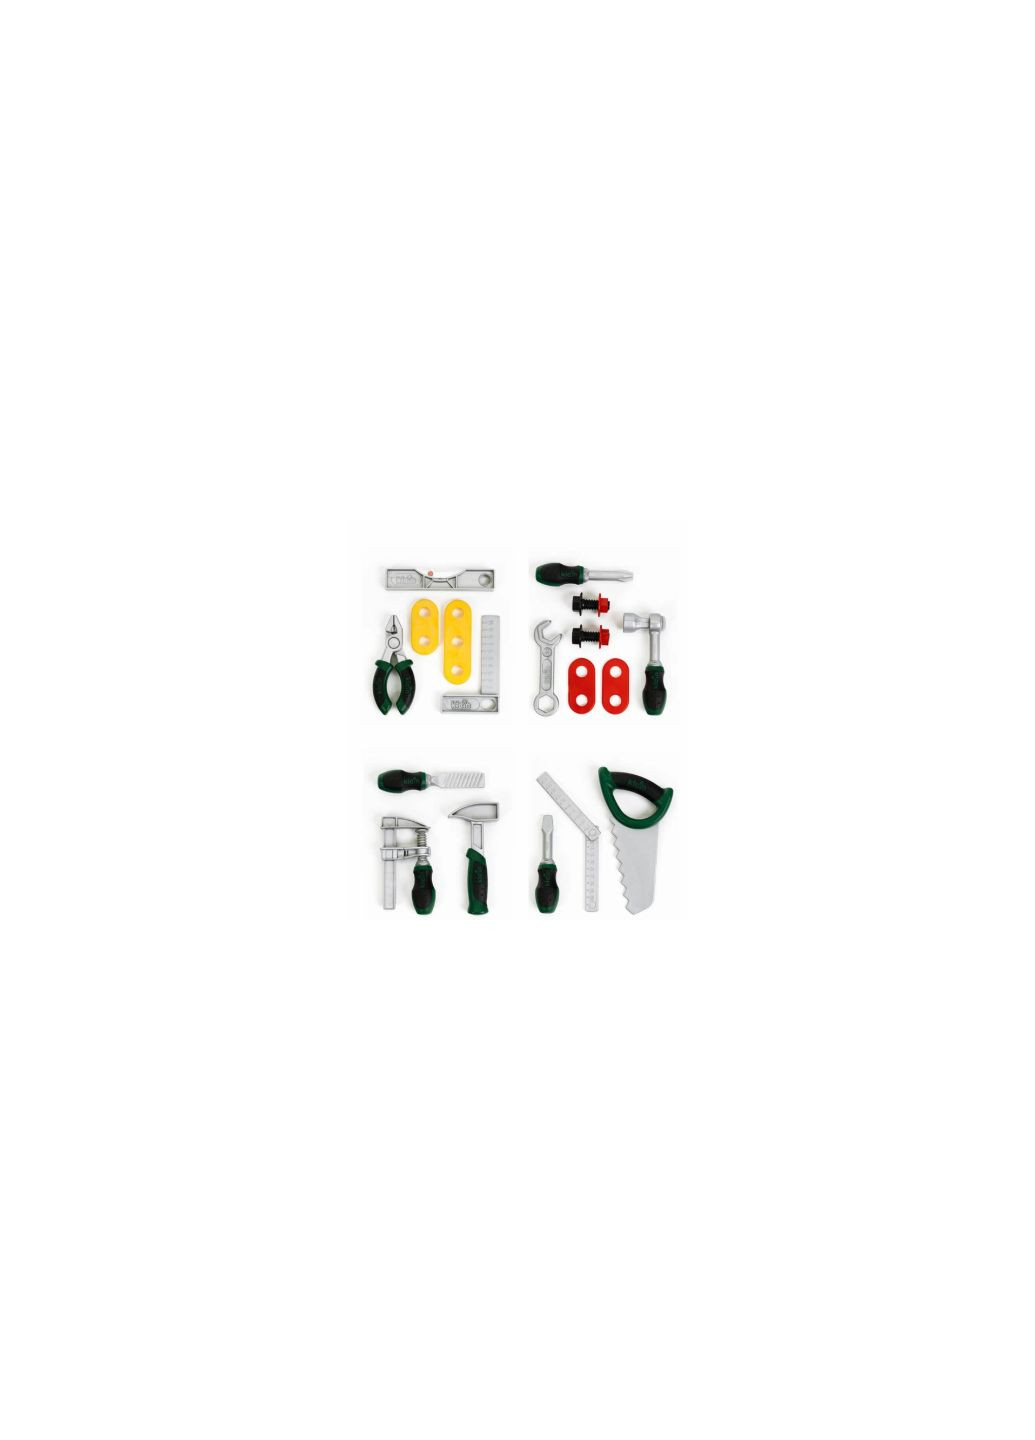 Игровой набор Набор инструментов (8007A) Bosch набір інструментів (275079138)